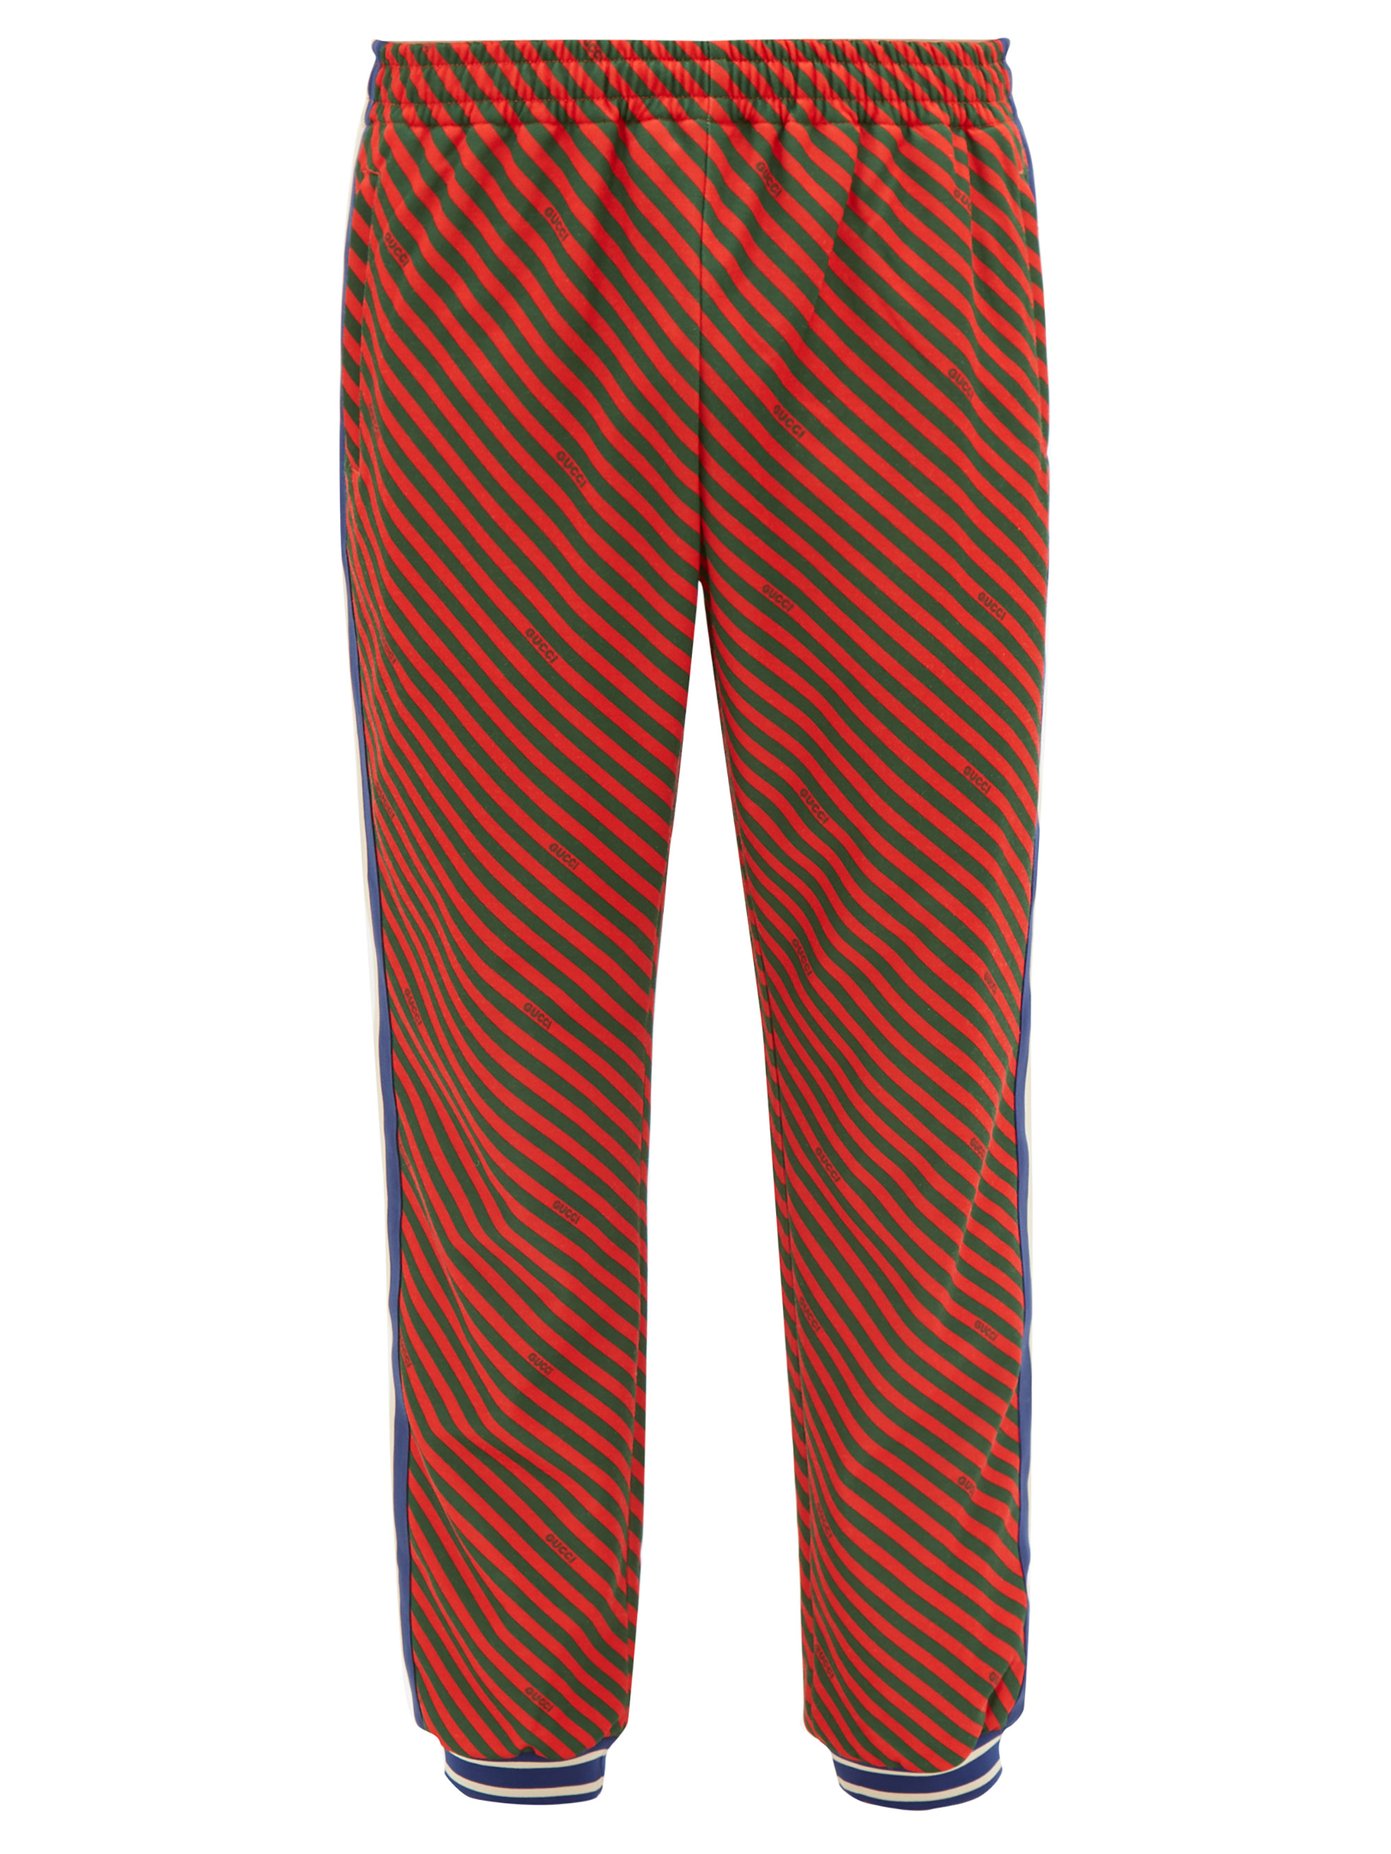 gucci striped pants